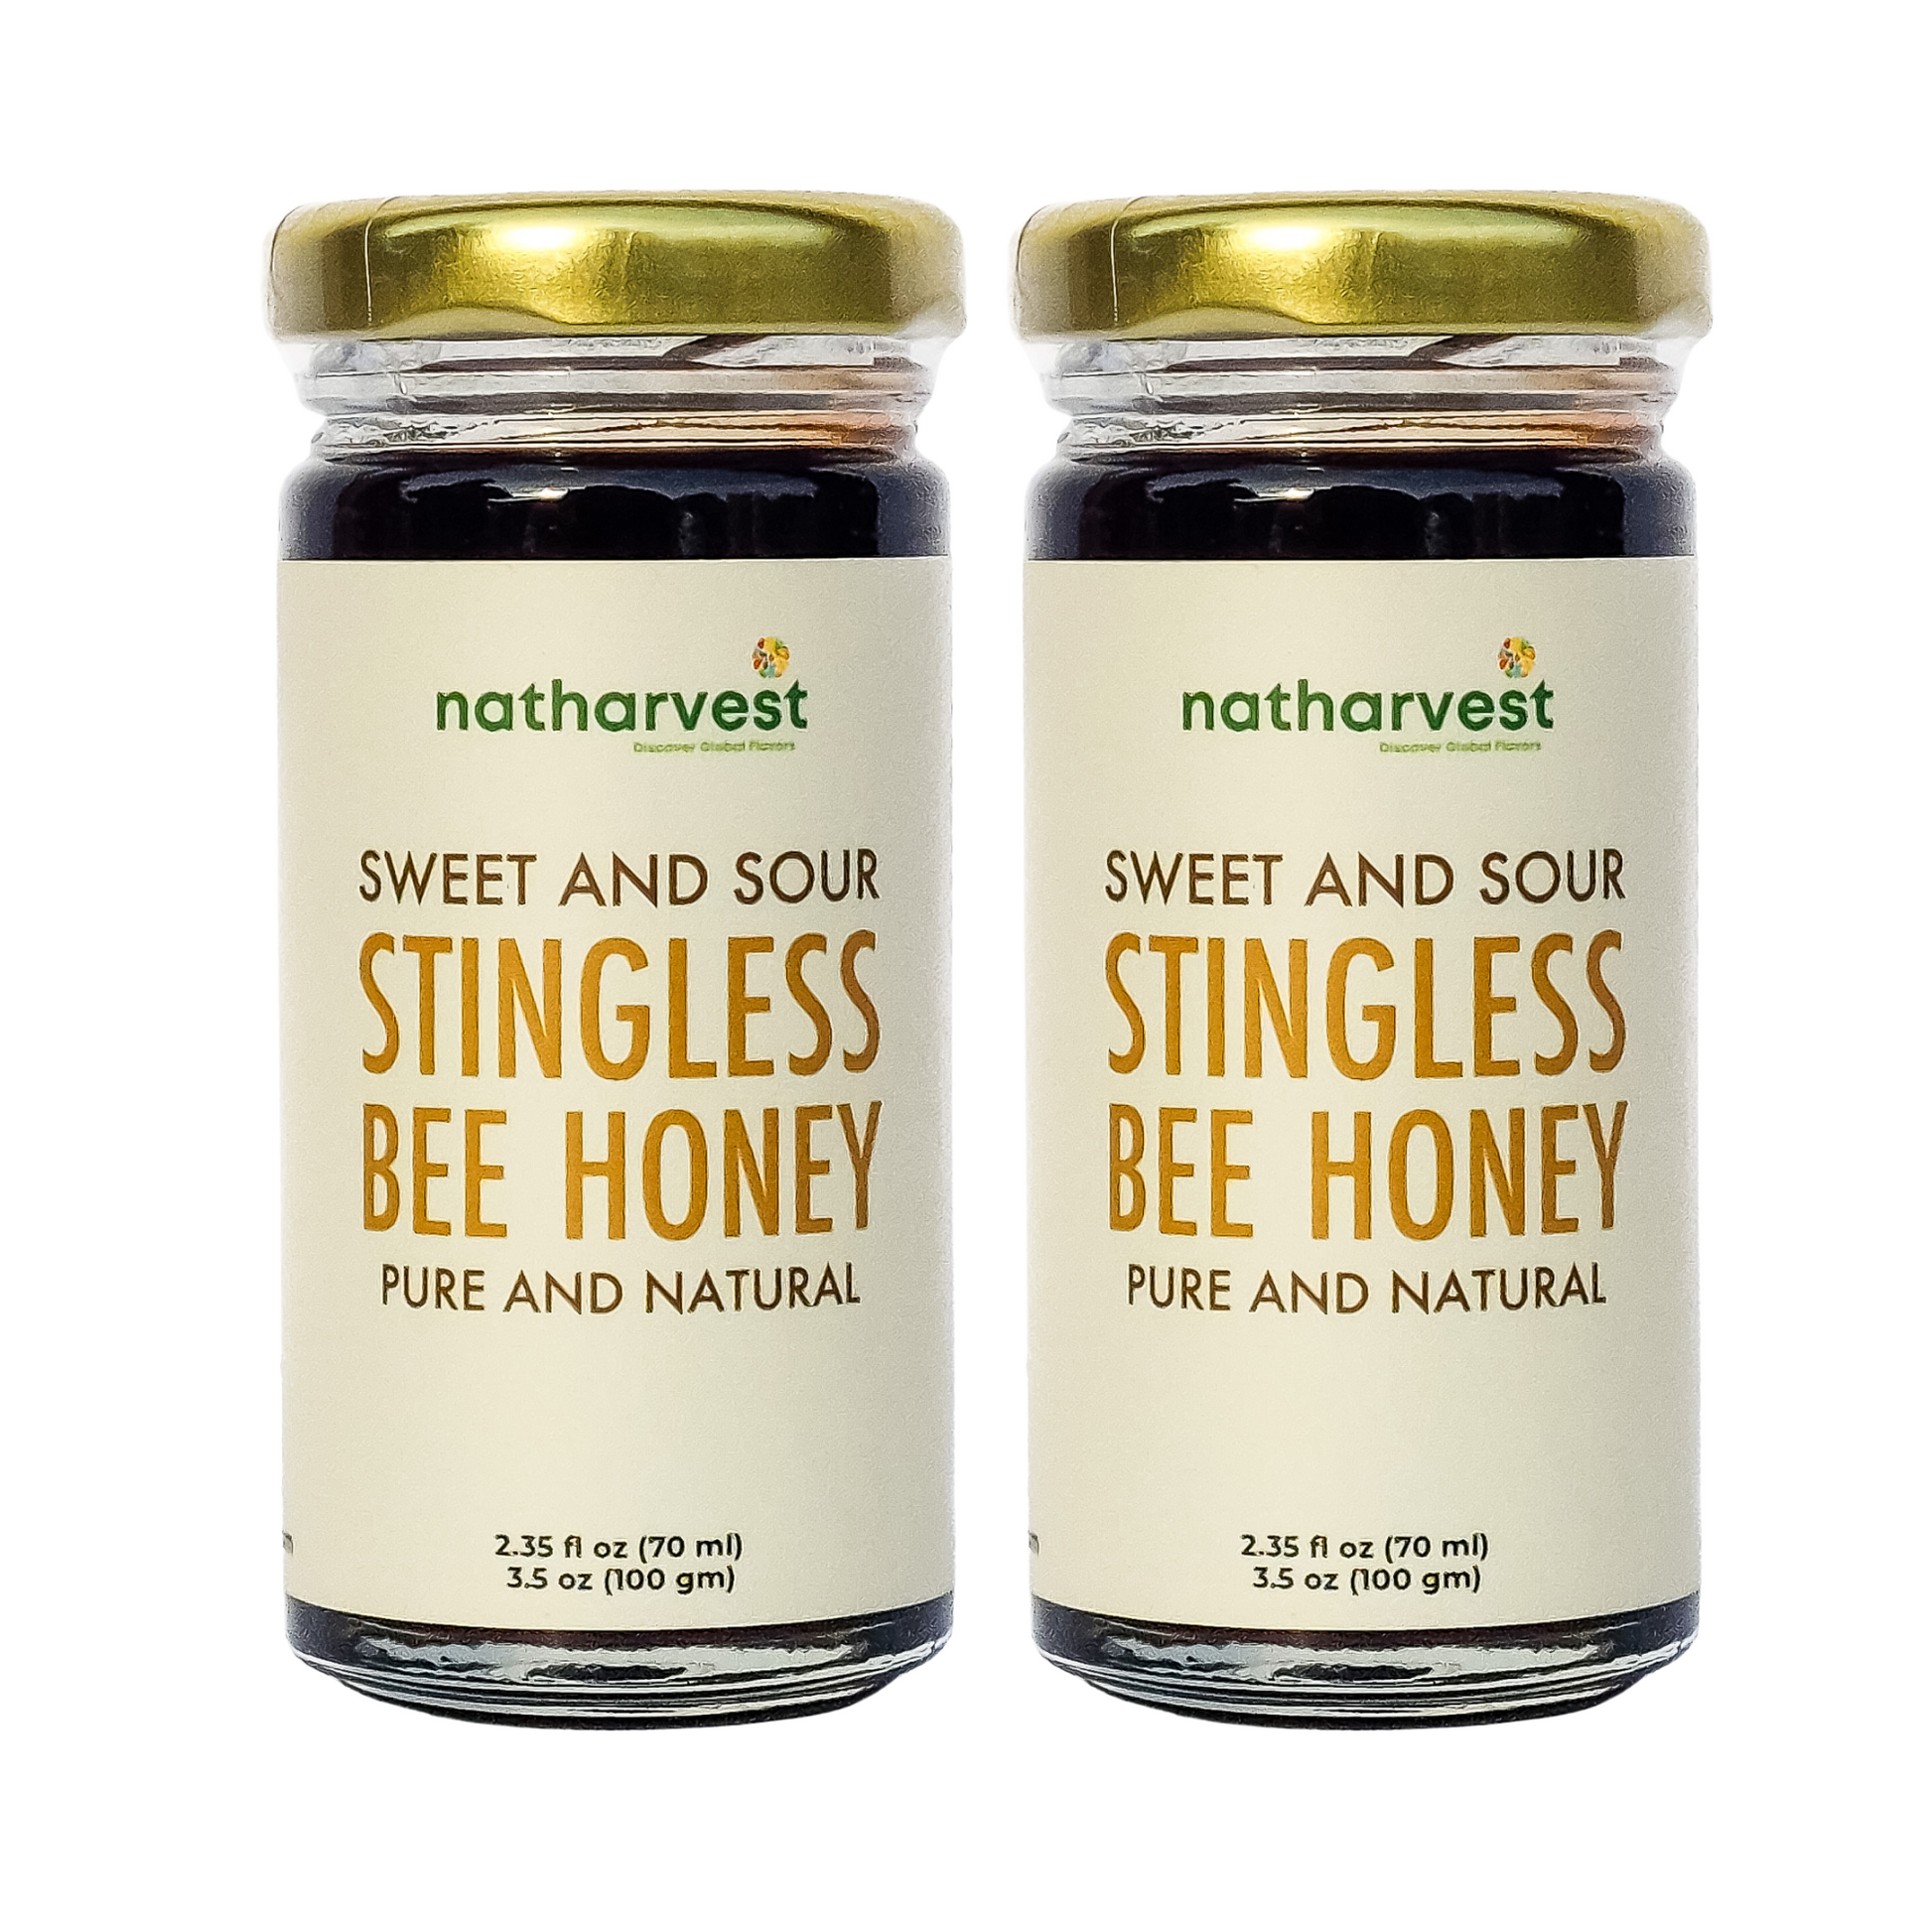 Natharvest stingless bee honey melipona meliponini trigona sugarbag madu kelulut